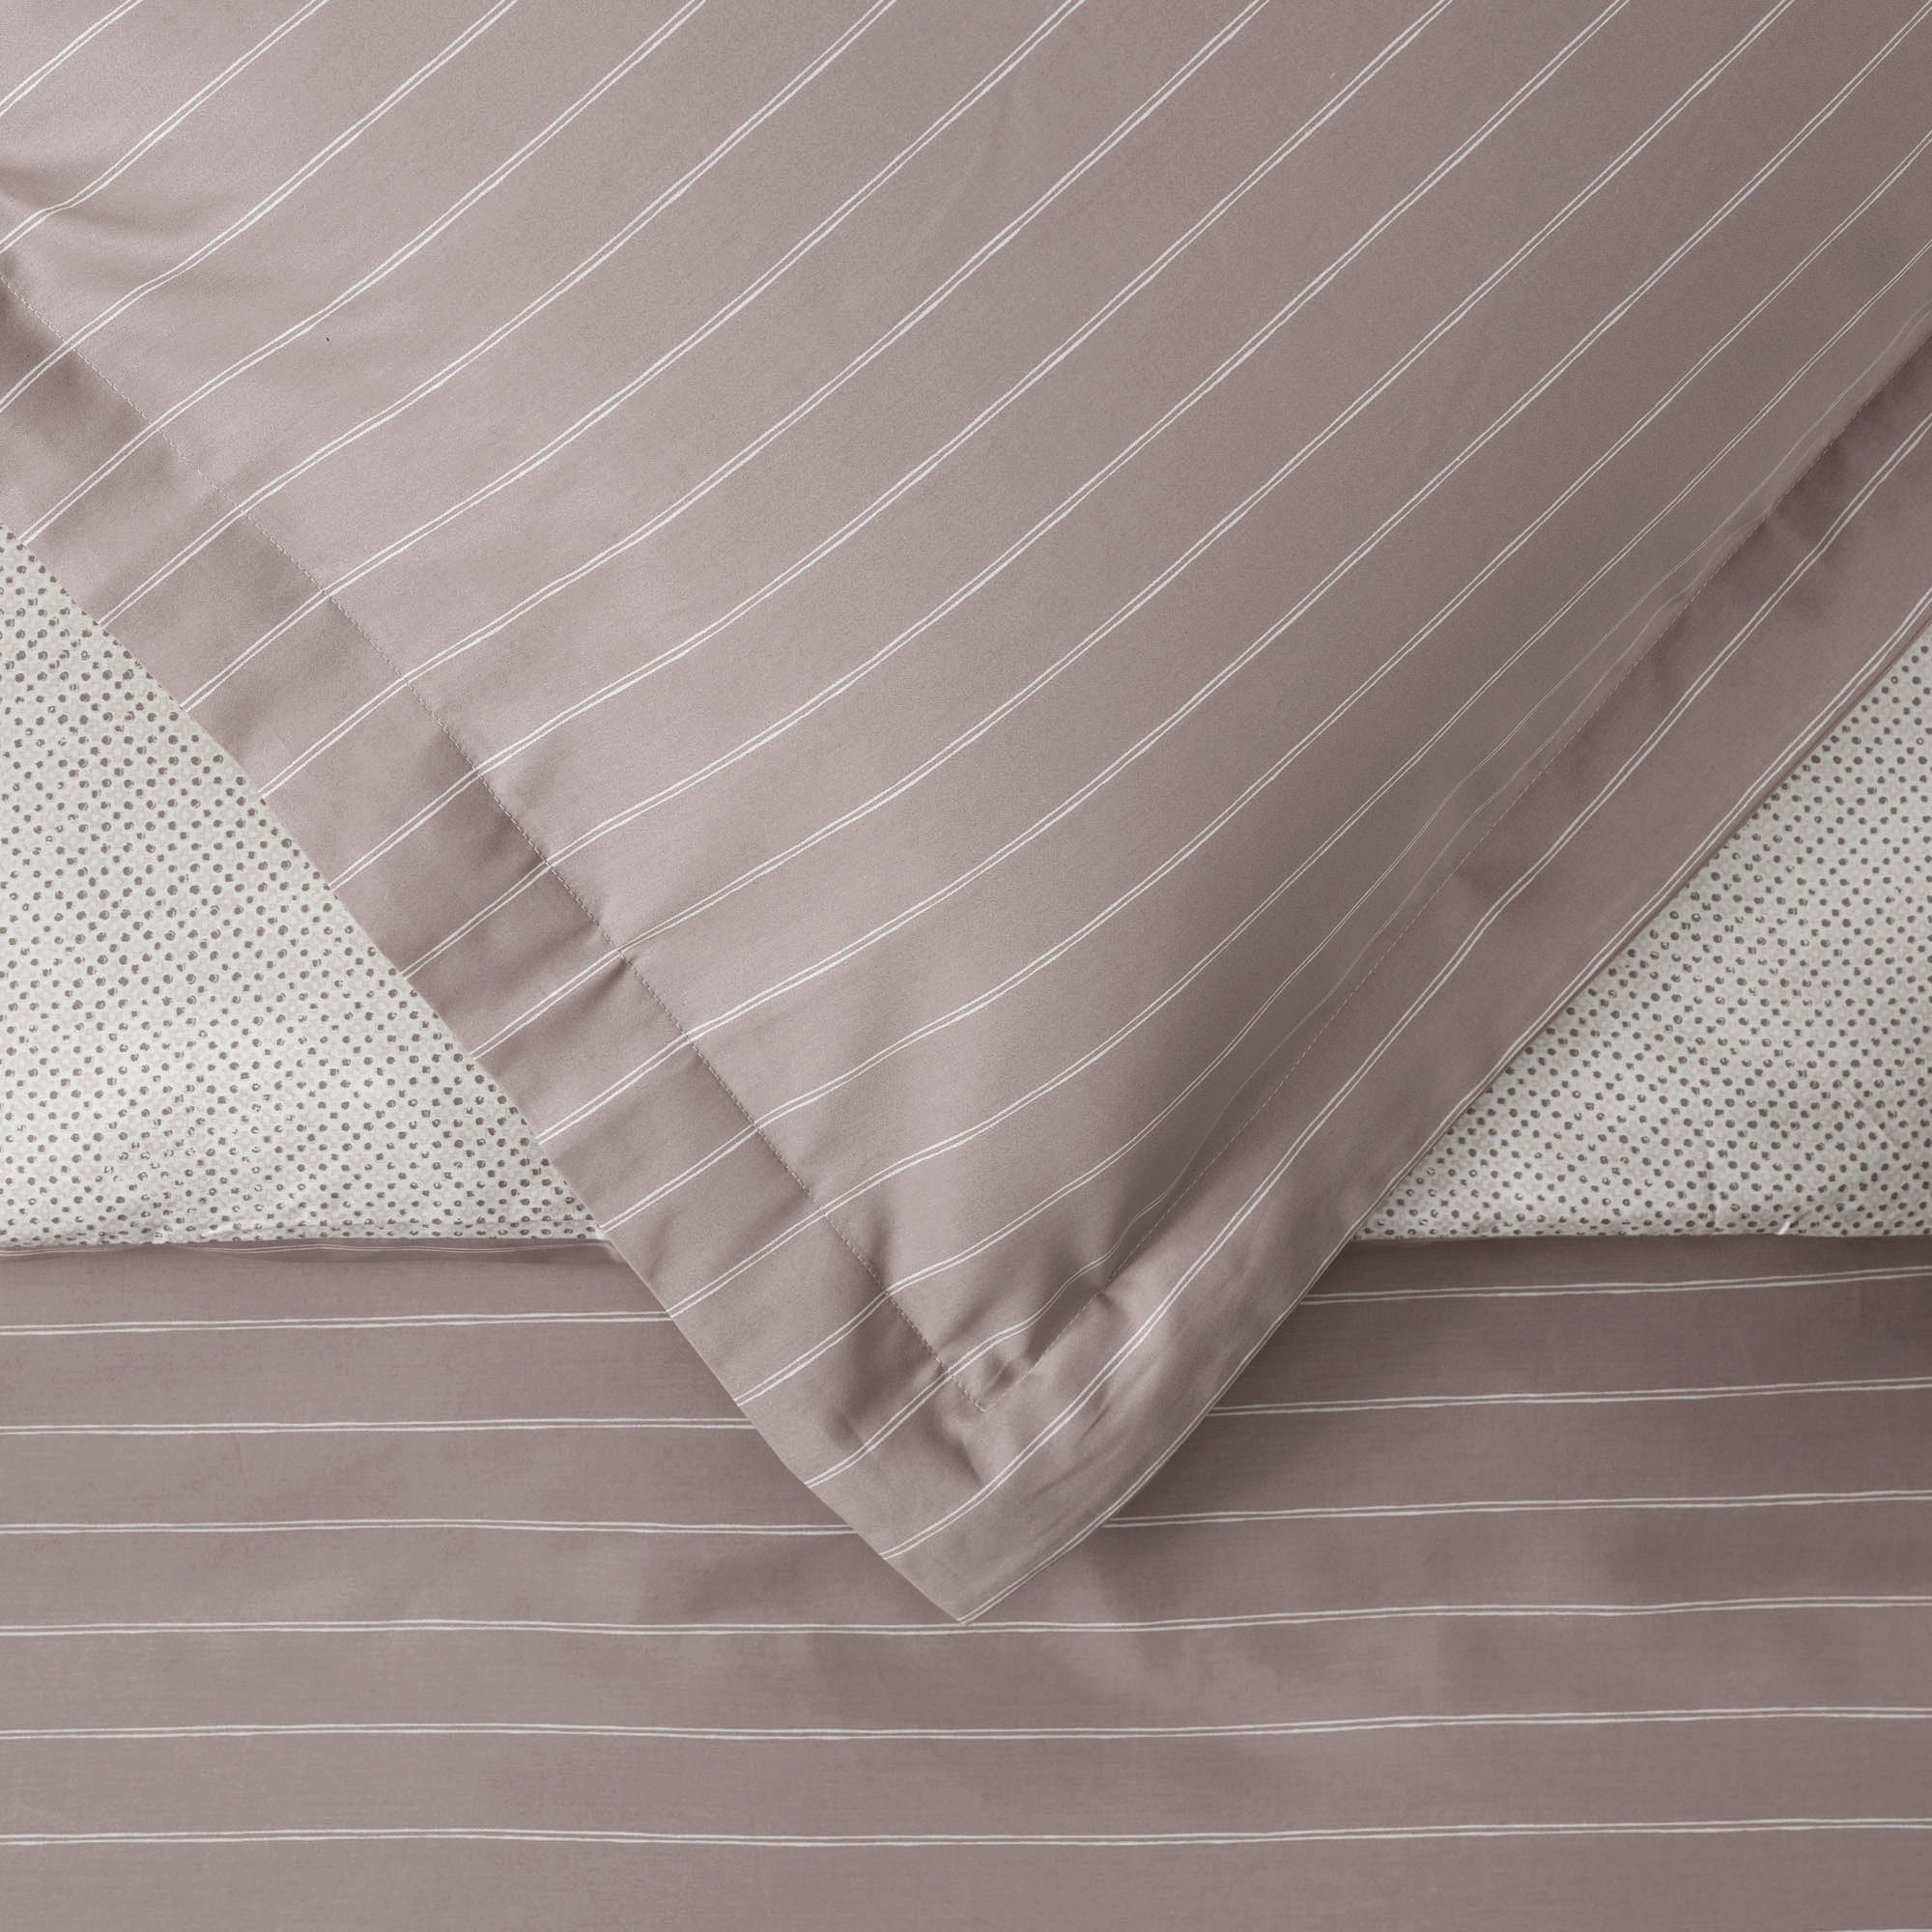 Detalle funda nórdica Vinca Zucchi en Fernández Textil. Lineas blancas sobre fondo gris, bajera con micromotivo. Satén de algodón puro